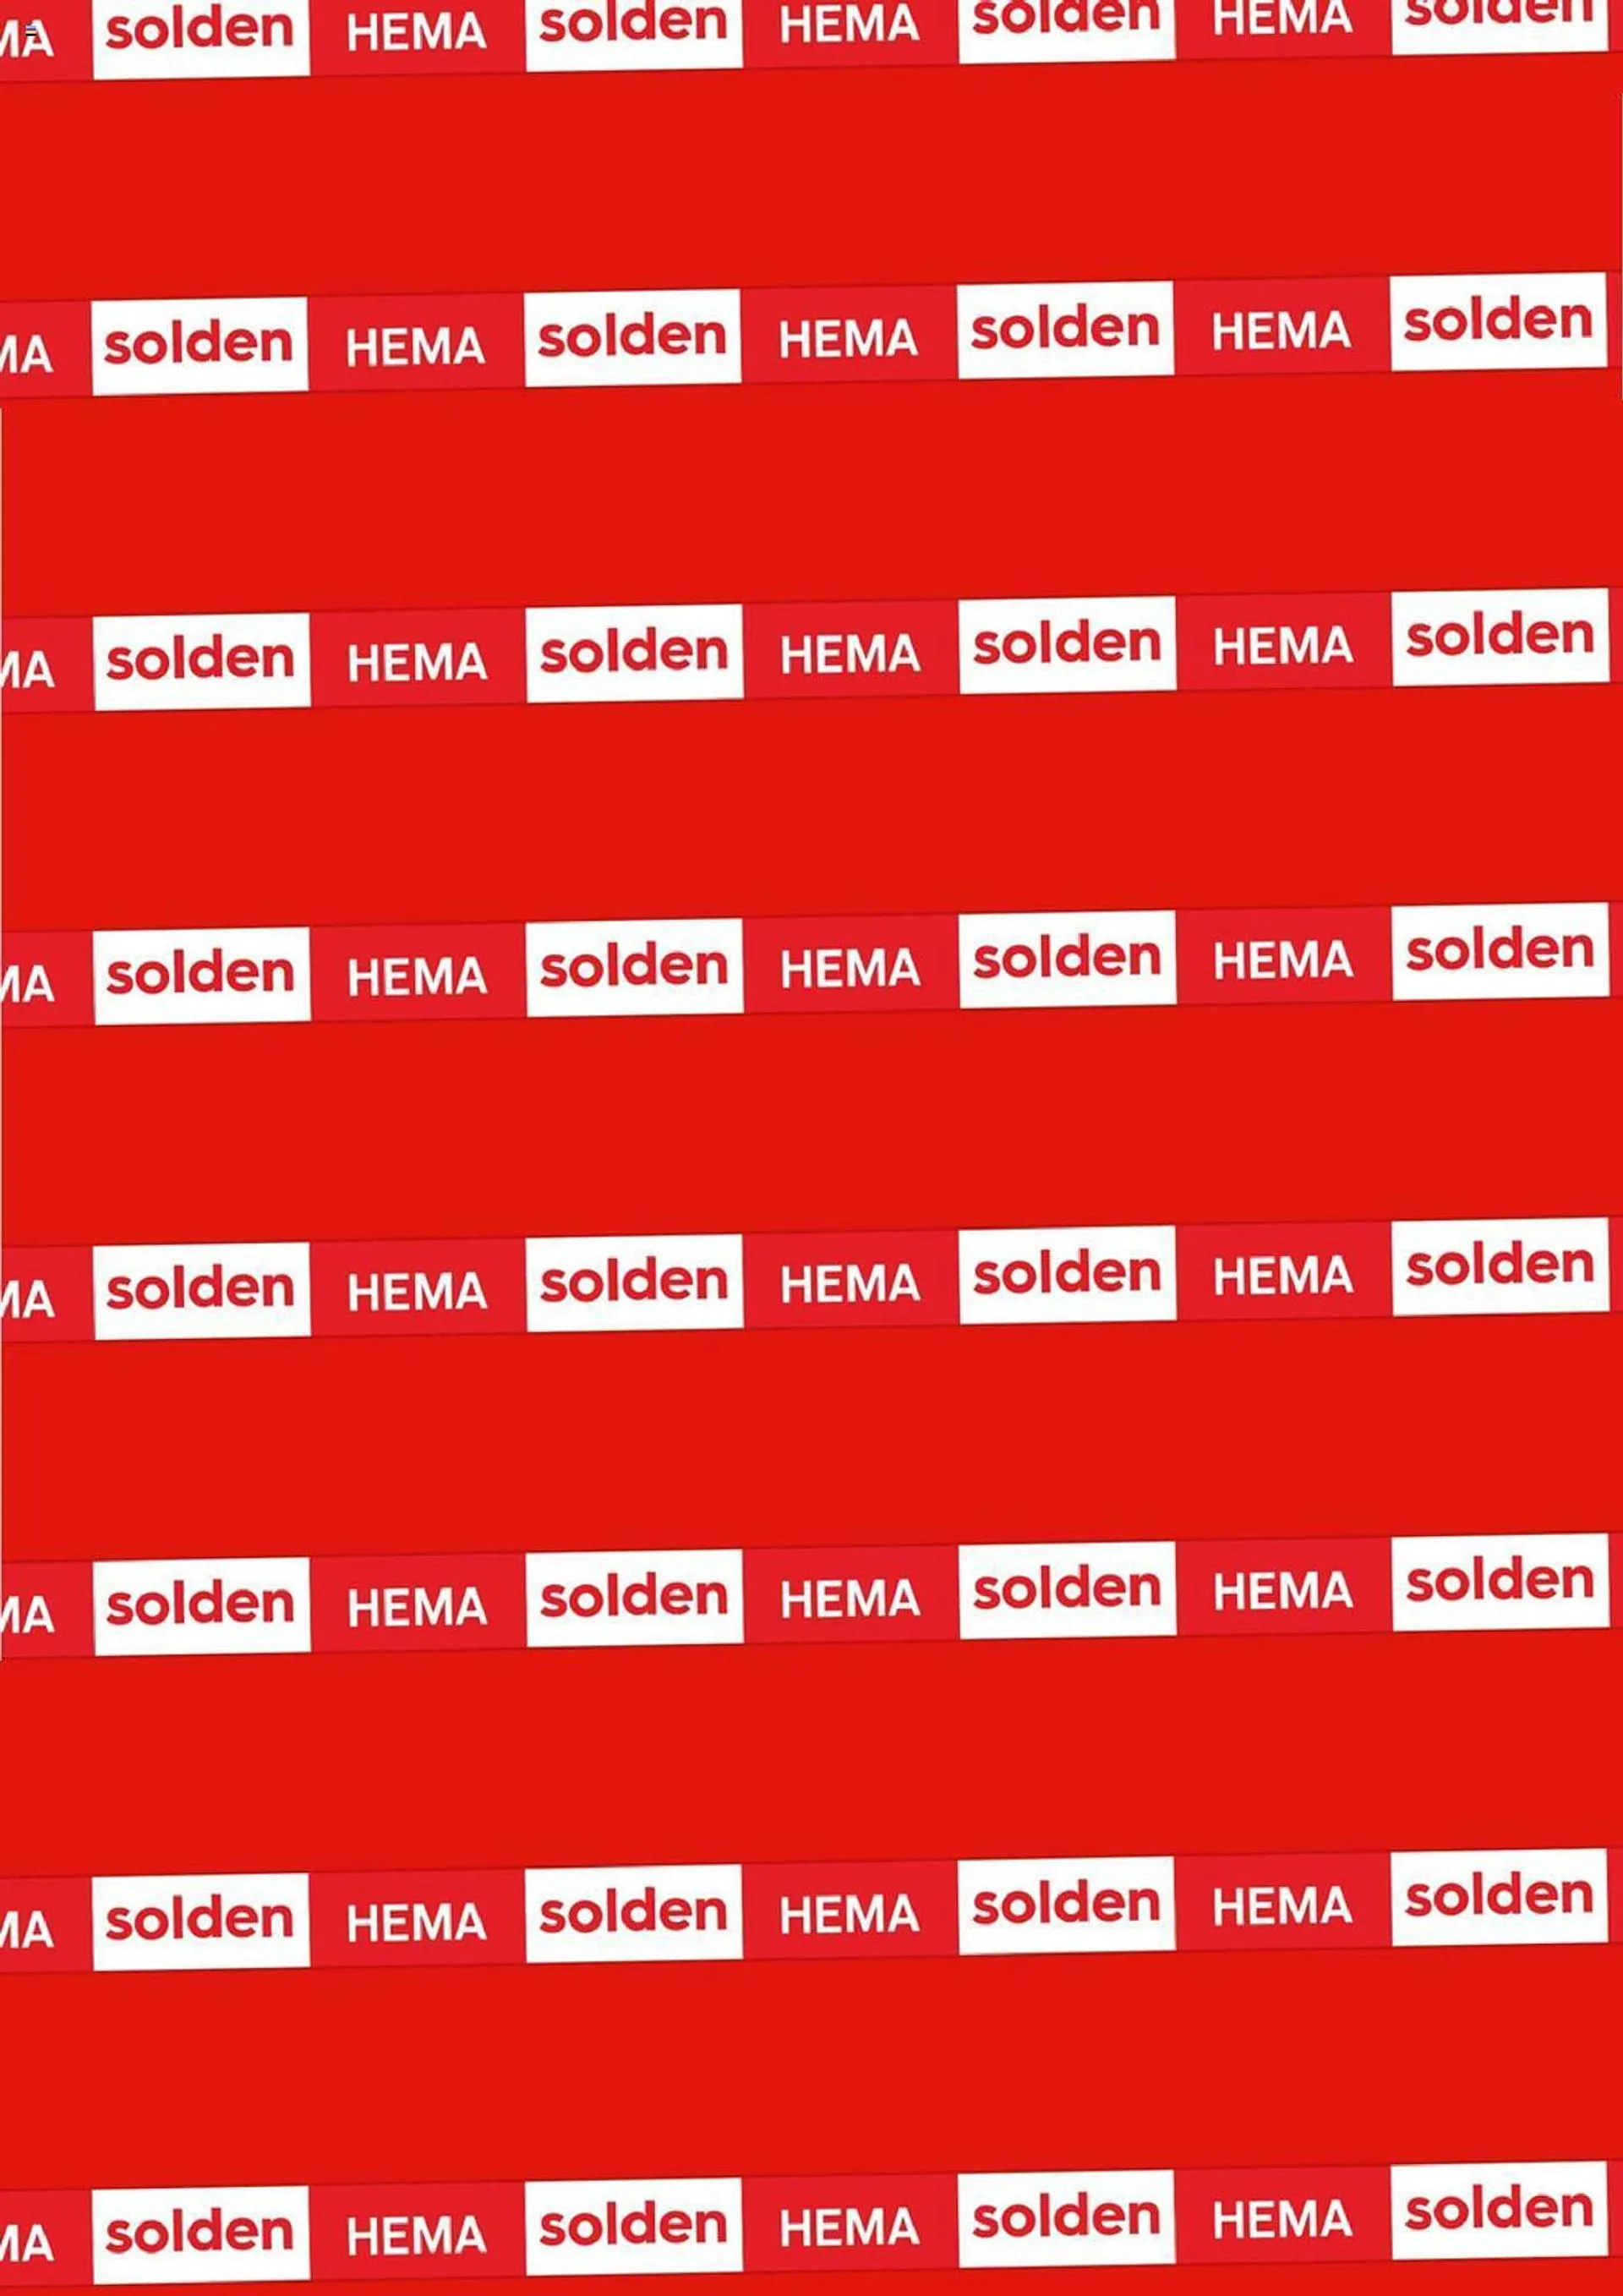 HEMA Folder - 1